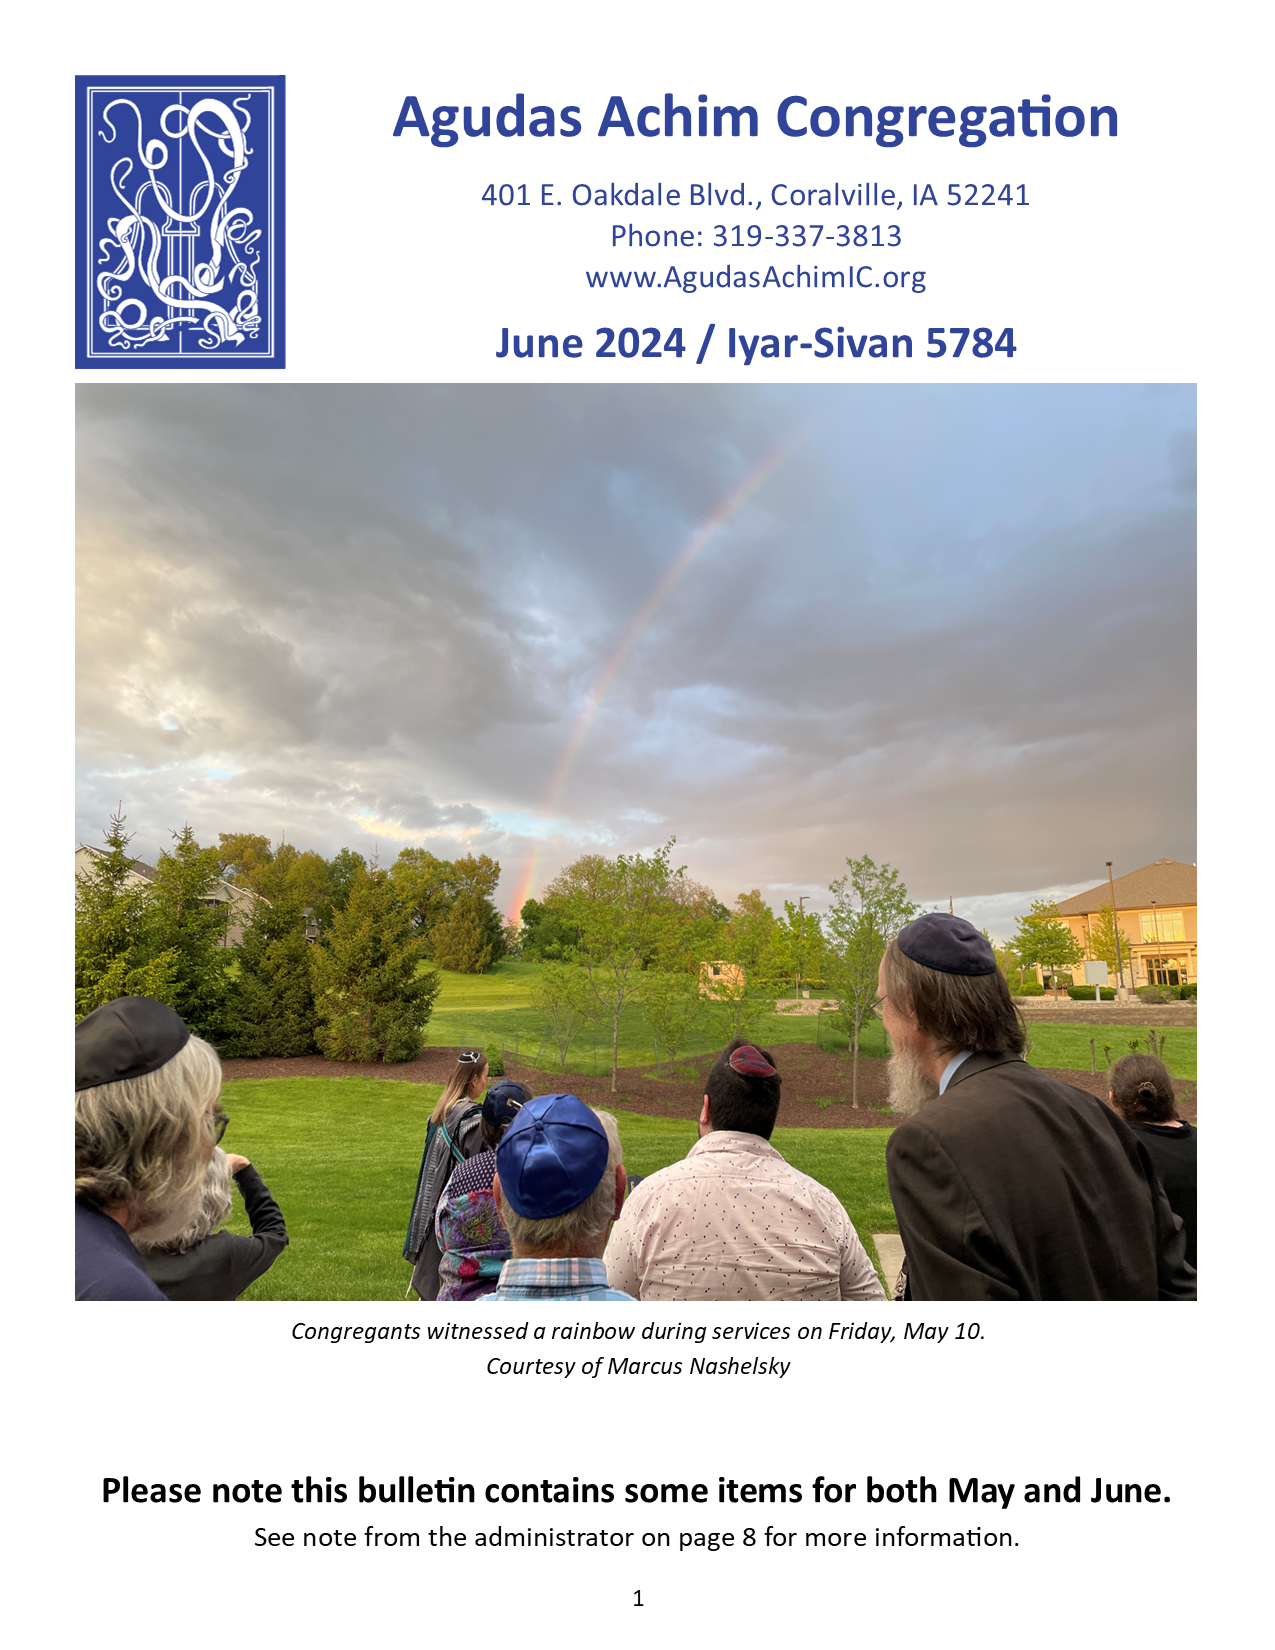 June 2024 Bulletin Cover